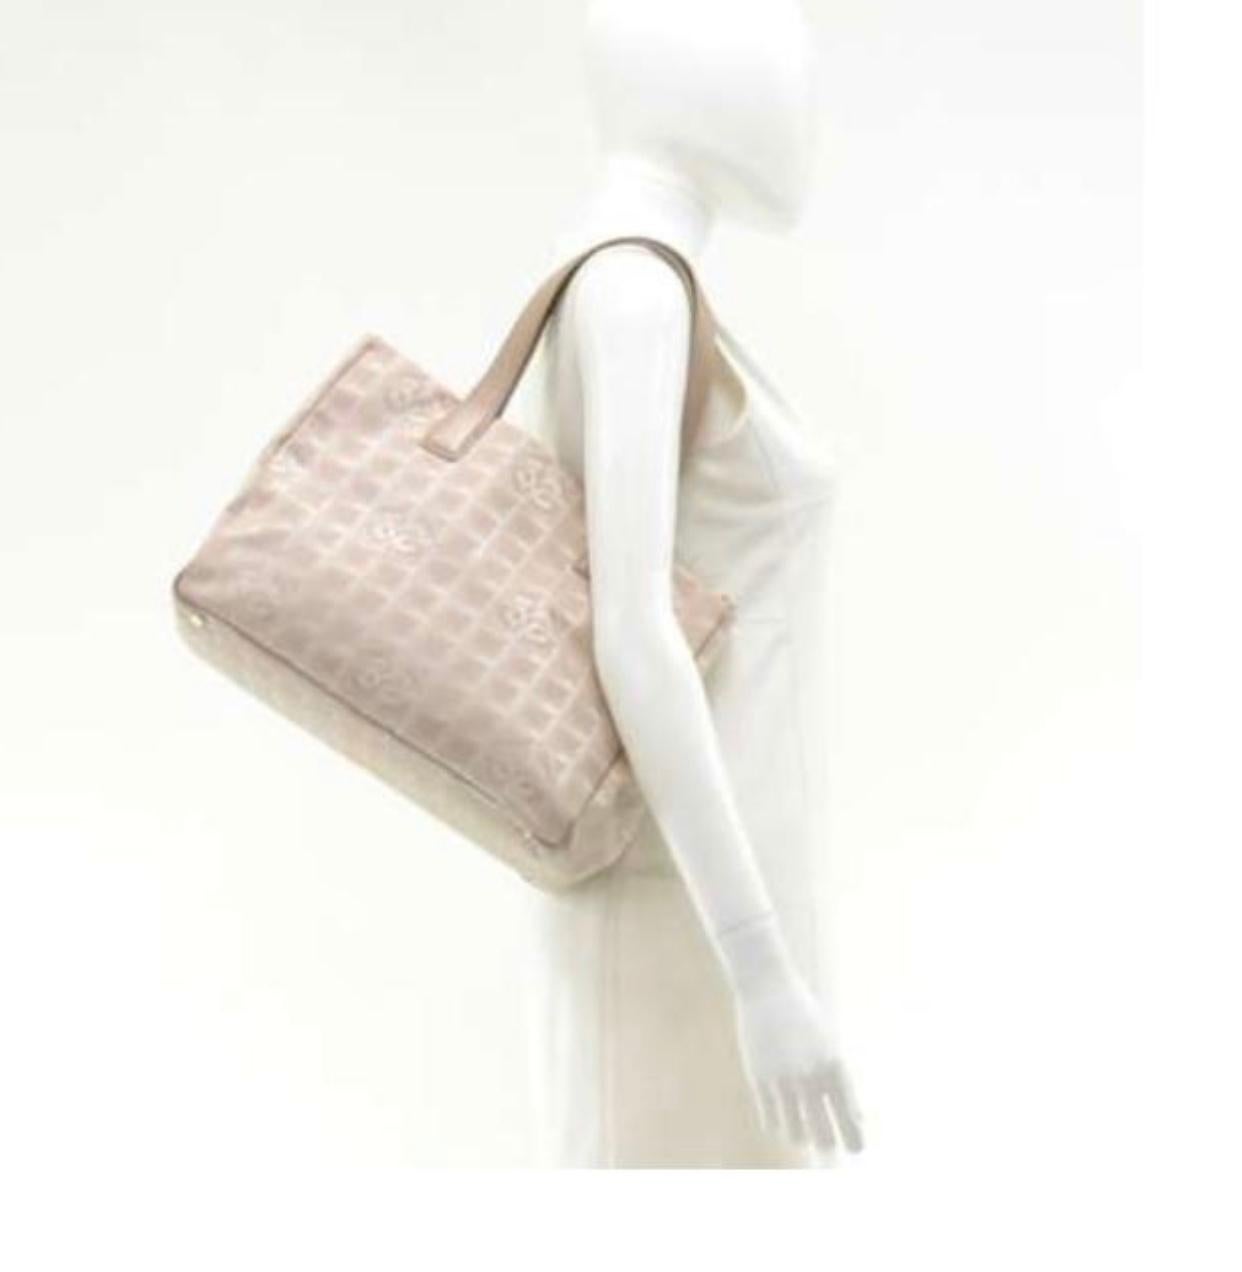  Chanel Handbag Bag New travel line Beige Nylon Jacquard Authentic Pre-Loved 3